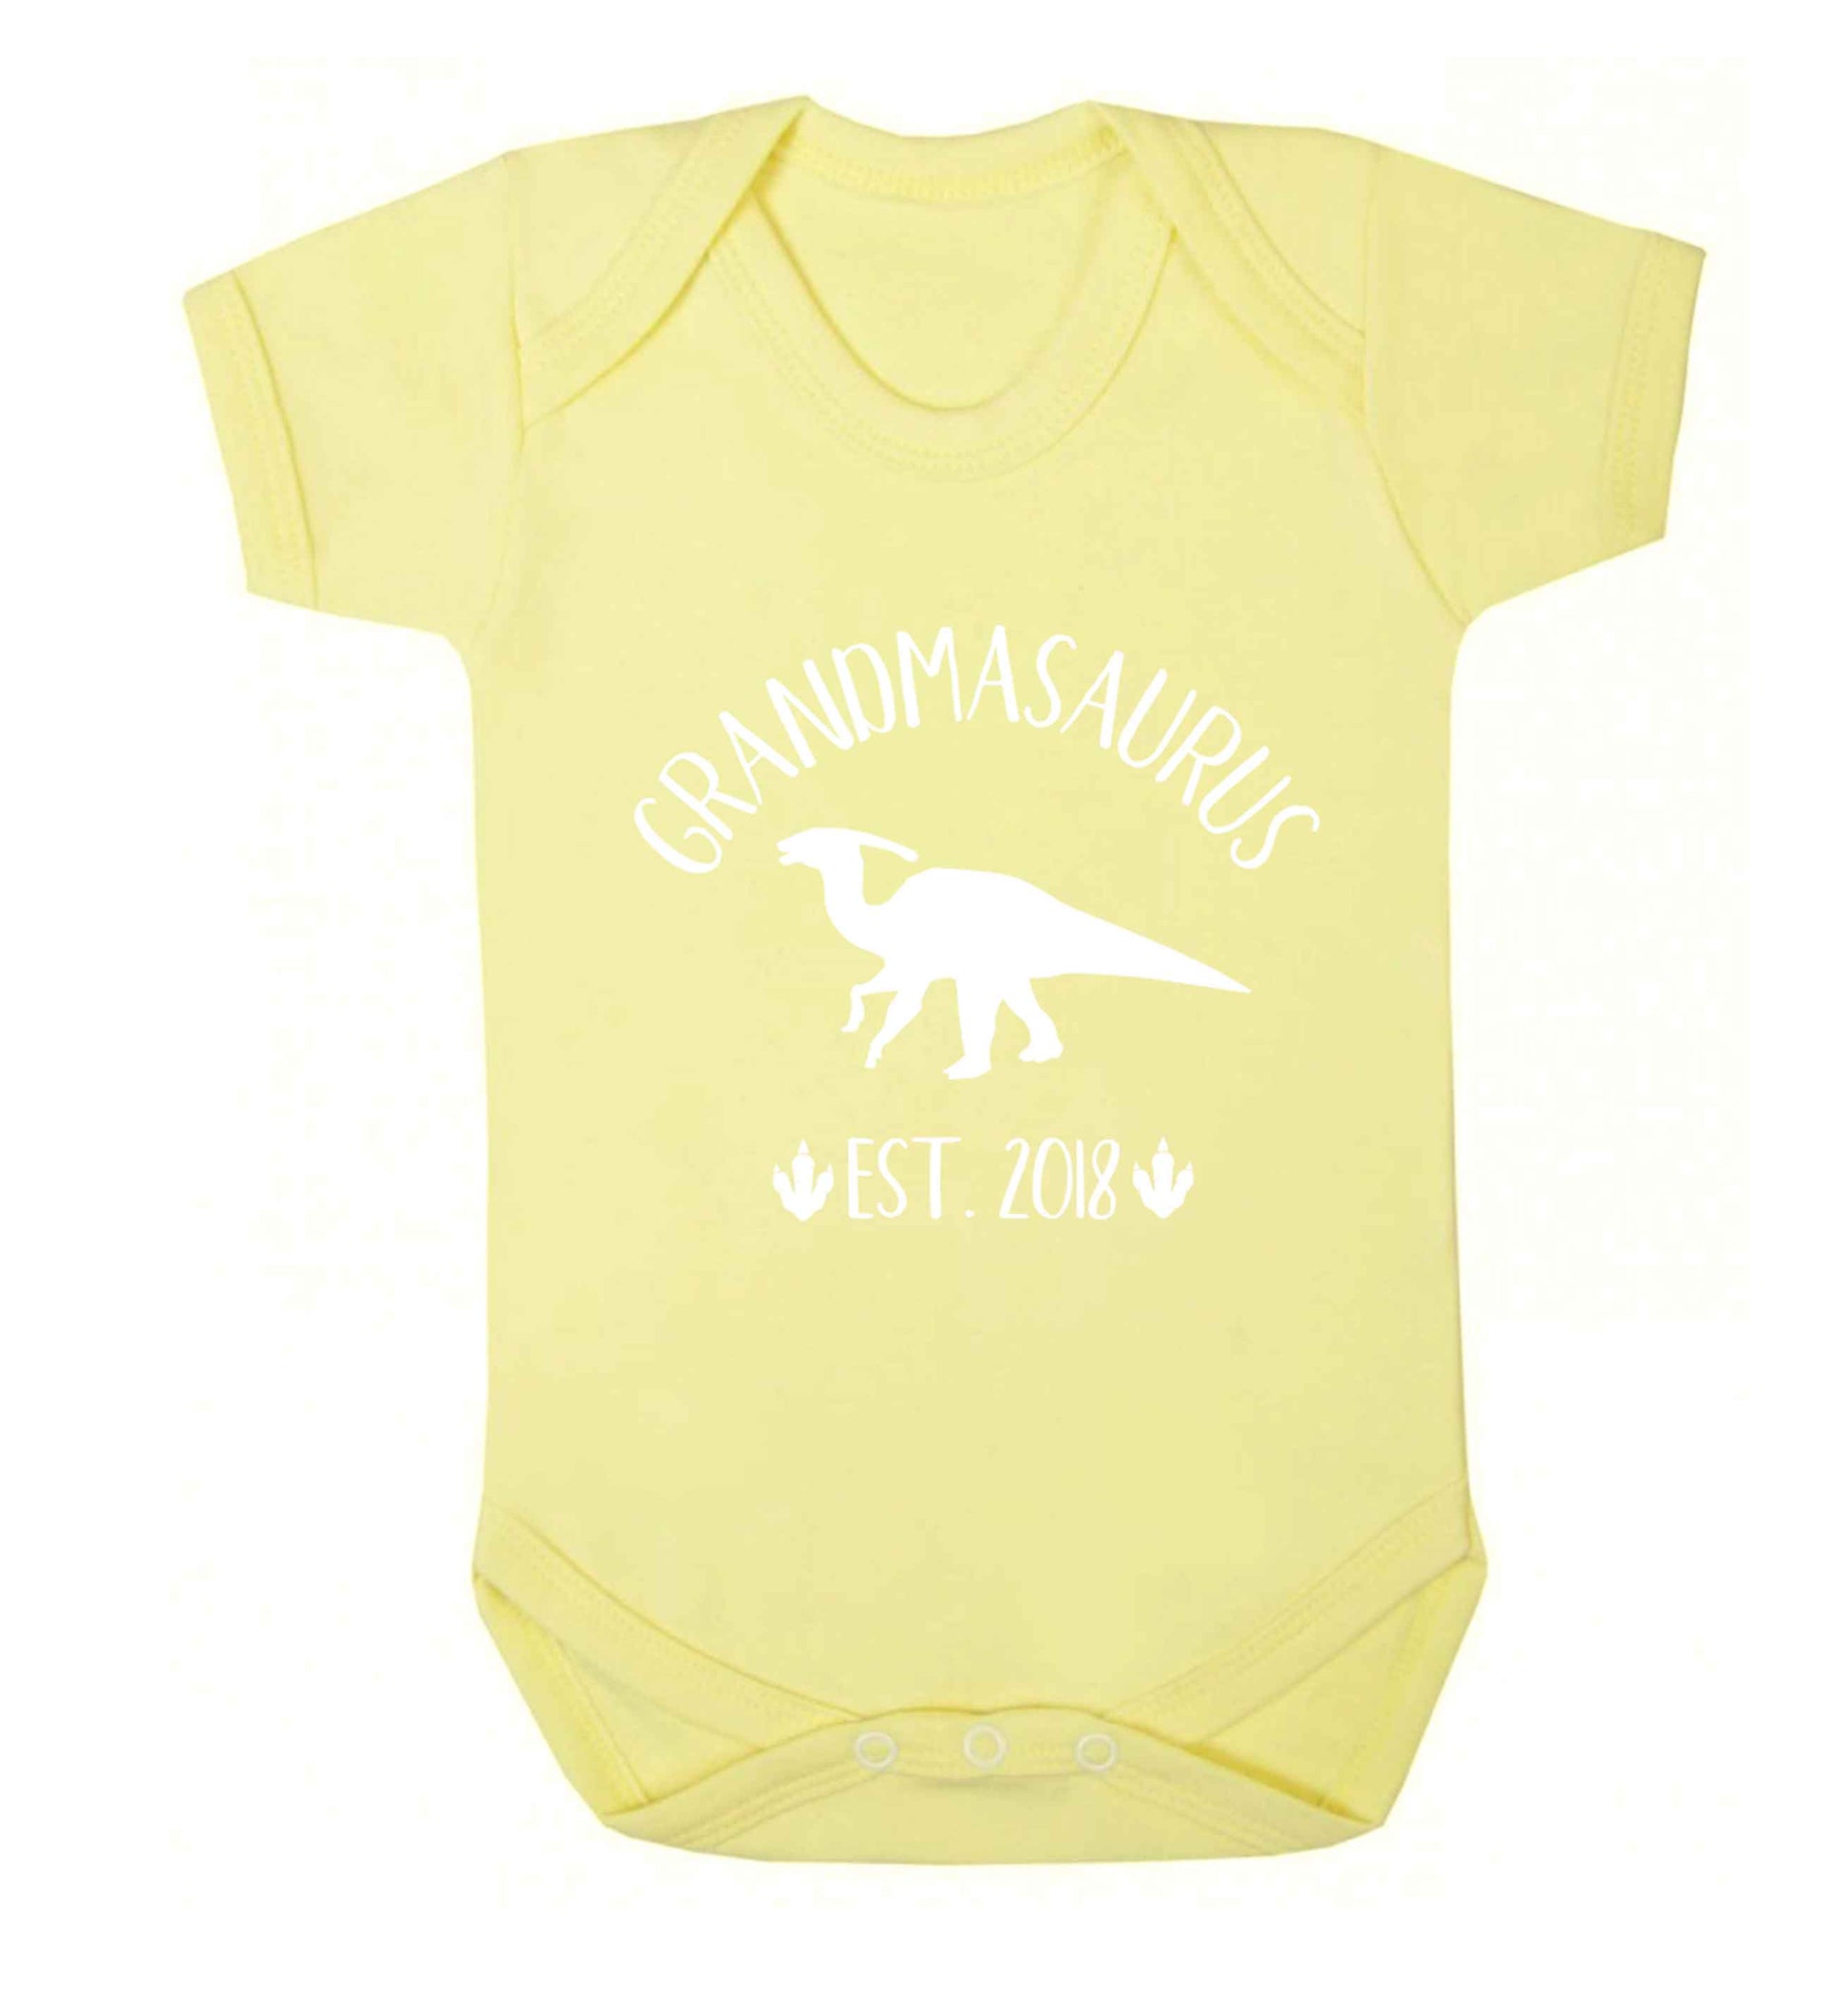 Personalised grandmasaurus since (custom date) Baby Vest pale yellow 18-24 months